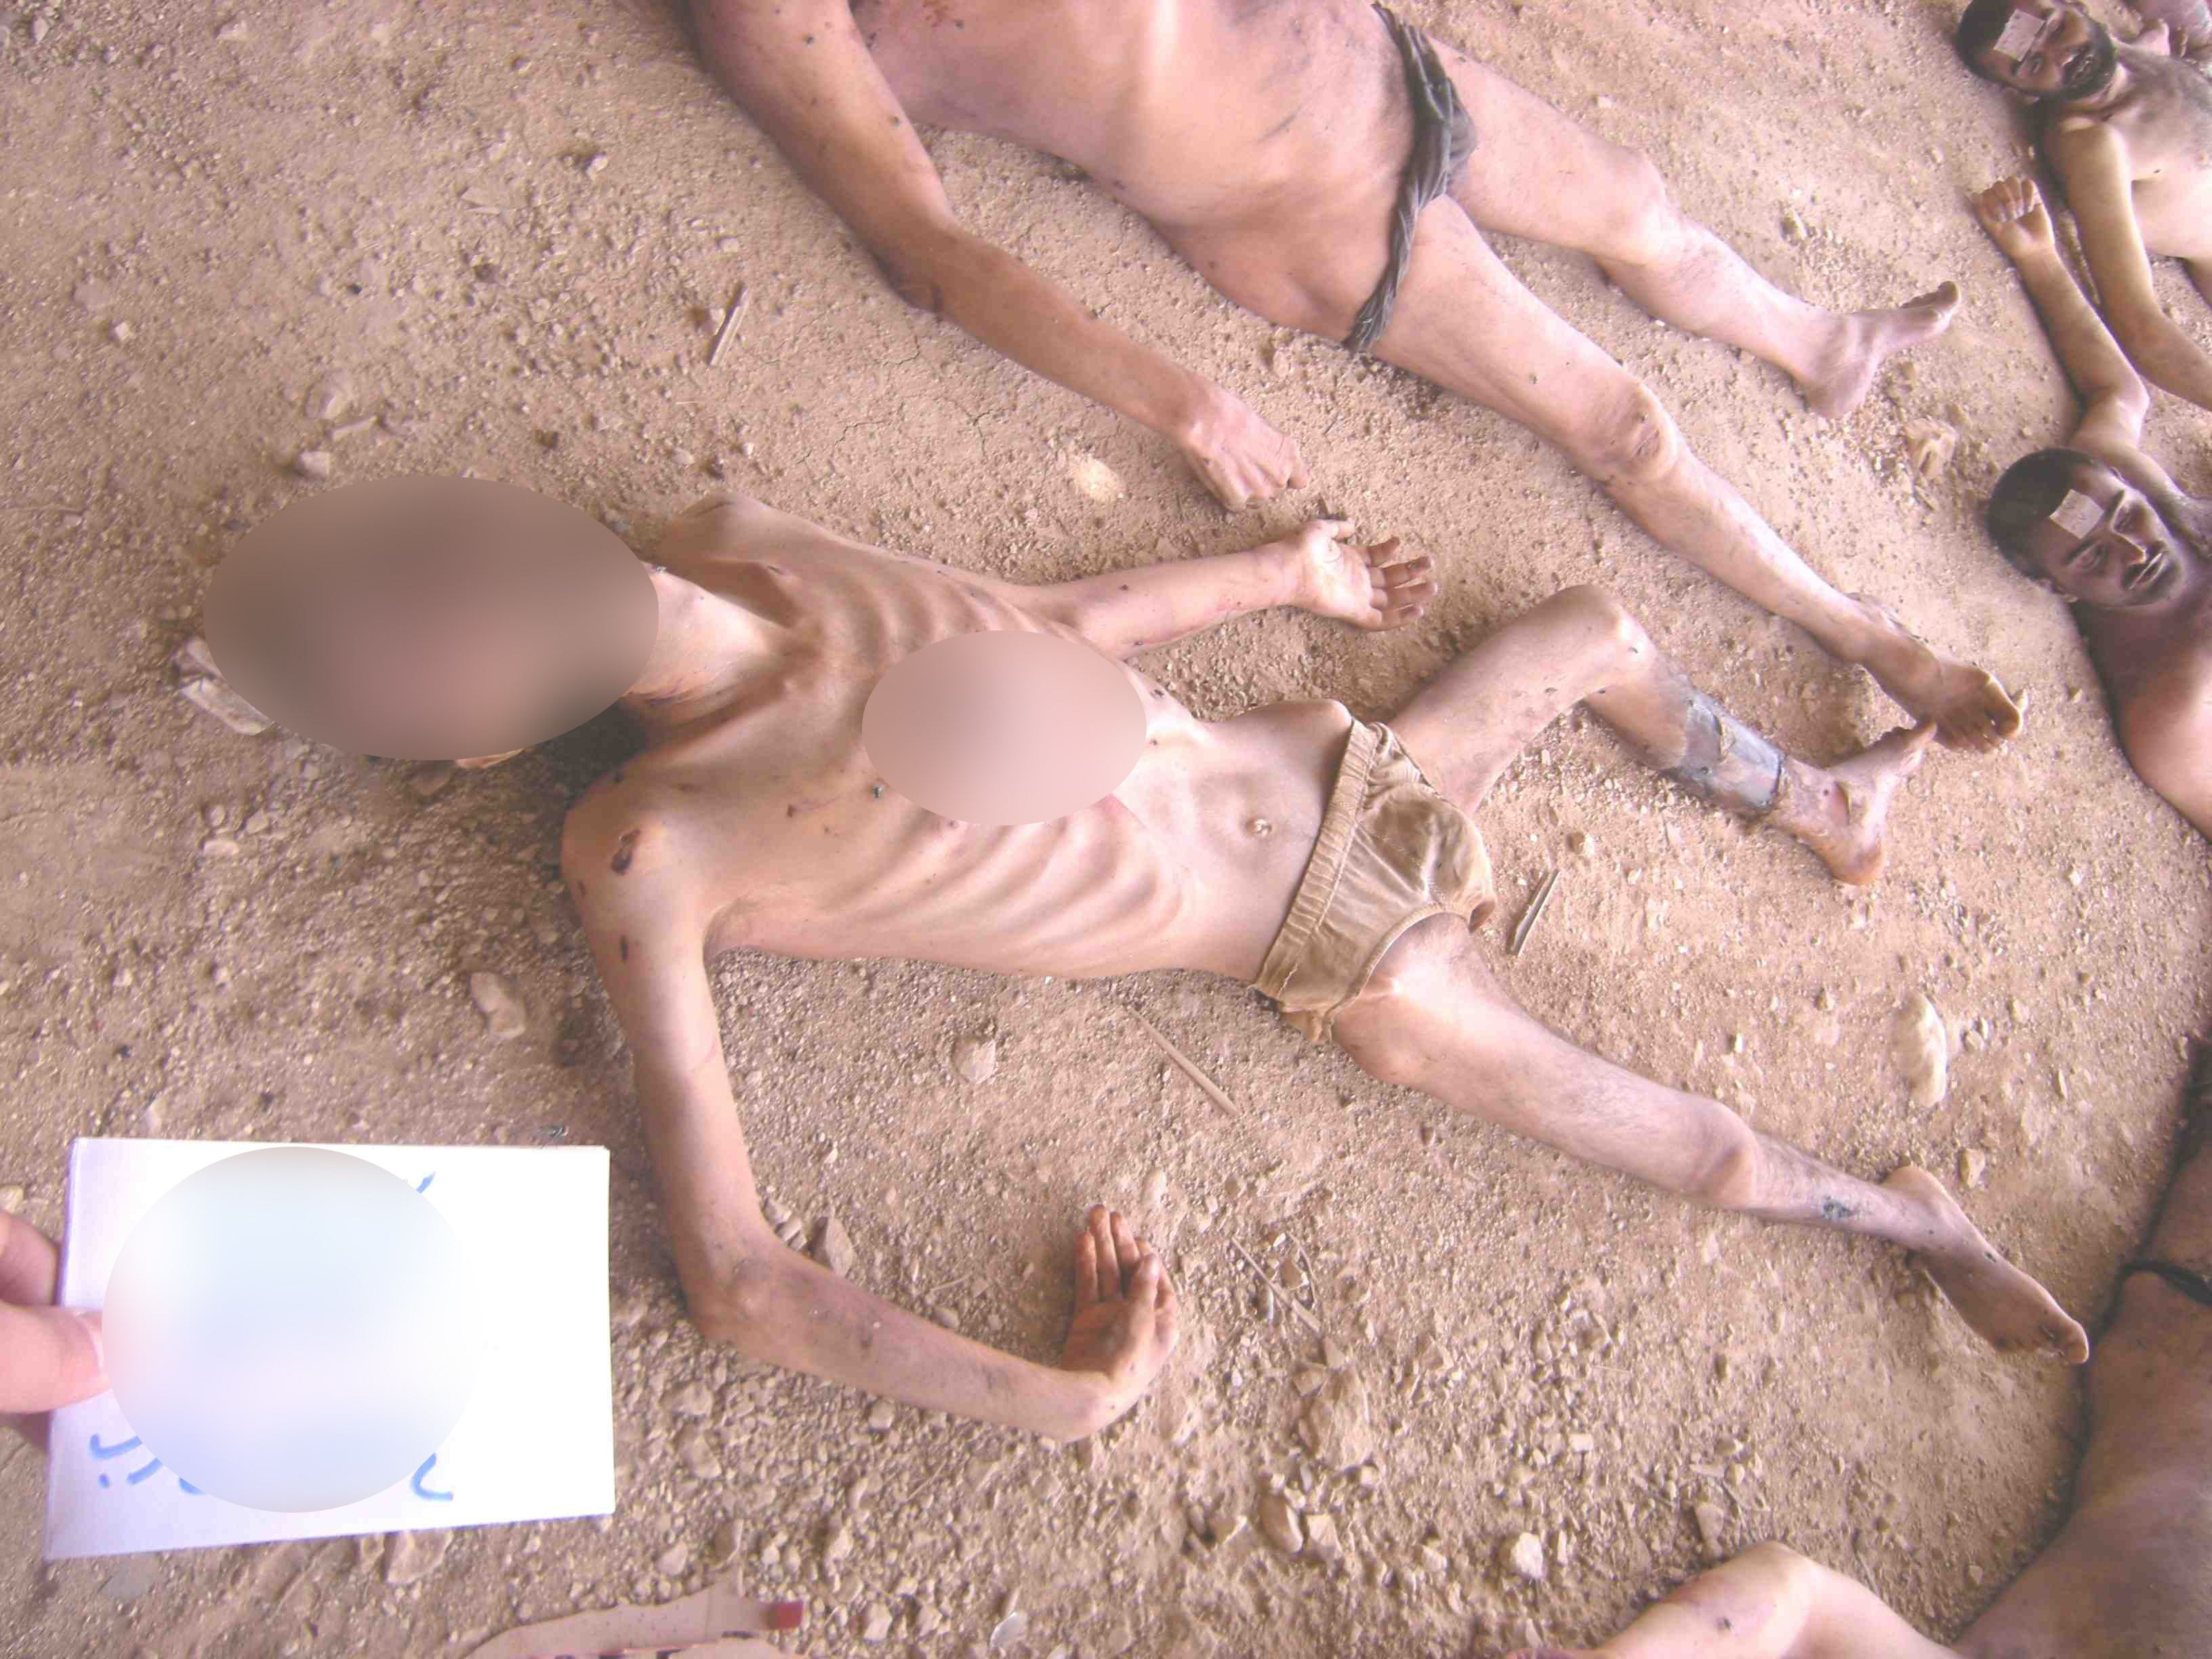 Assad's torture victims look like Holocaust victims